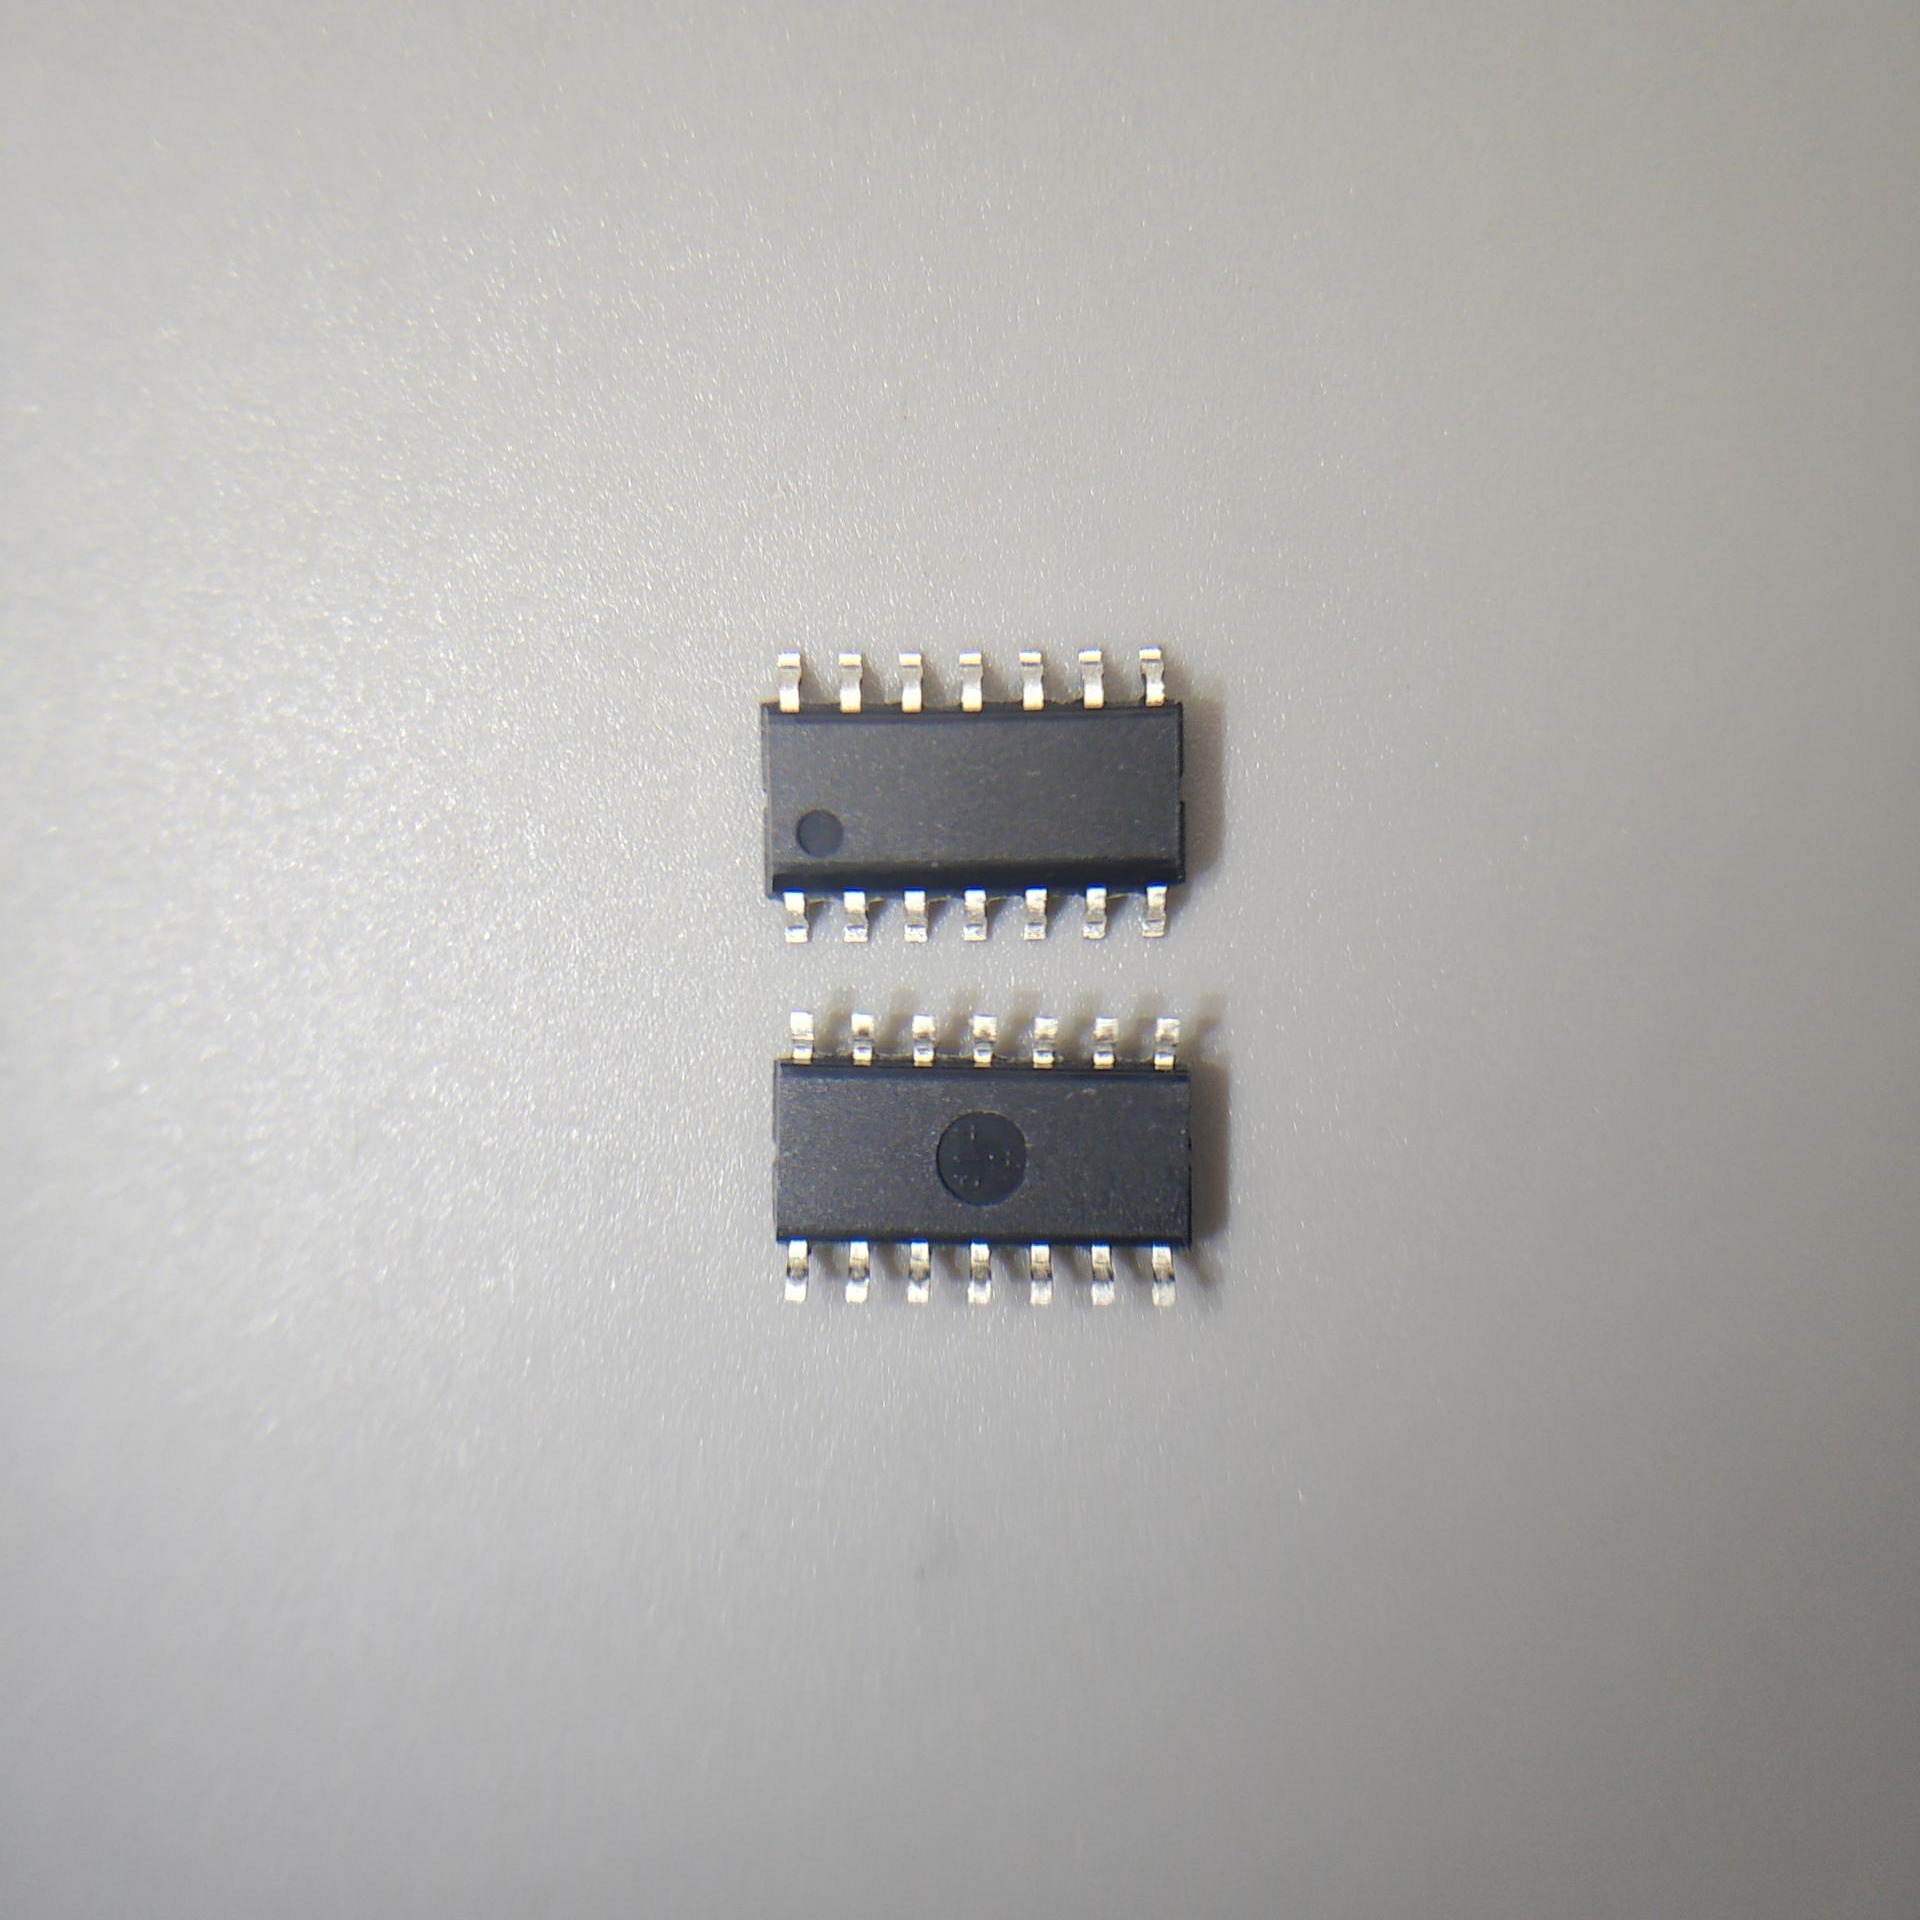 AIP9274  单 片机 电源管理芯片 放算IC专业代理商芯片配单 经销与代理 ST